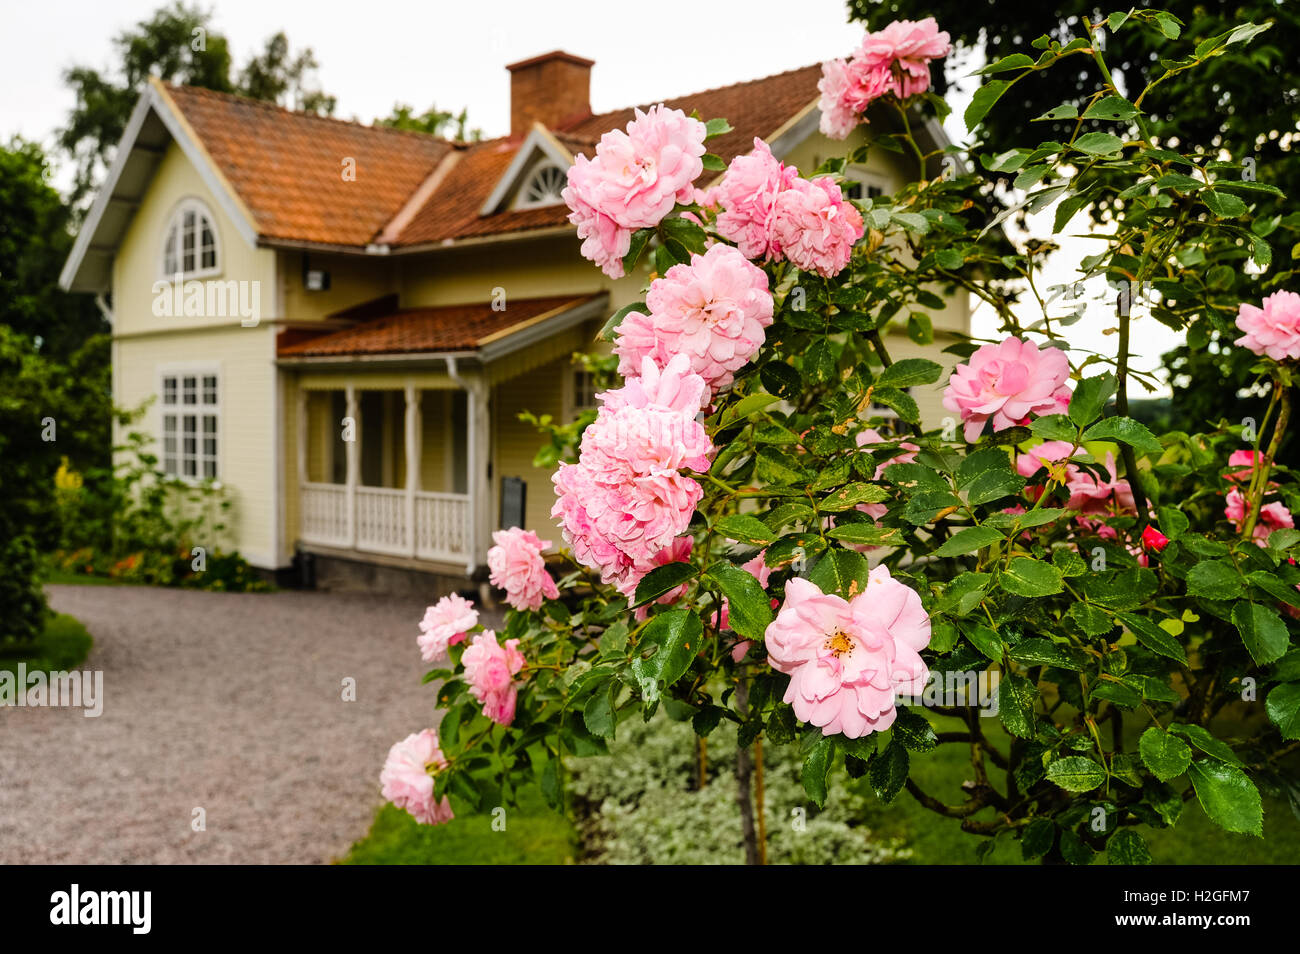 Sweden, Värmland, Sunne. Mårbacka is a mansion in Sunne Municipality. Author Selma Lagerlöf was born and raised at Mårbacka. Stock Photo